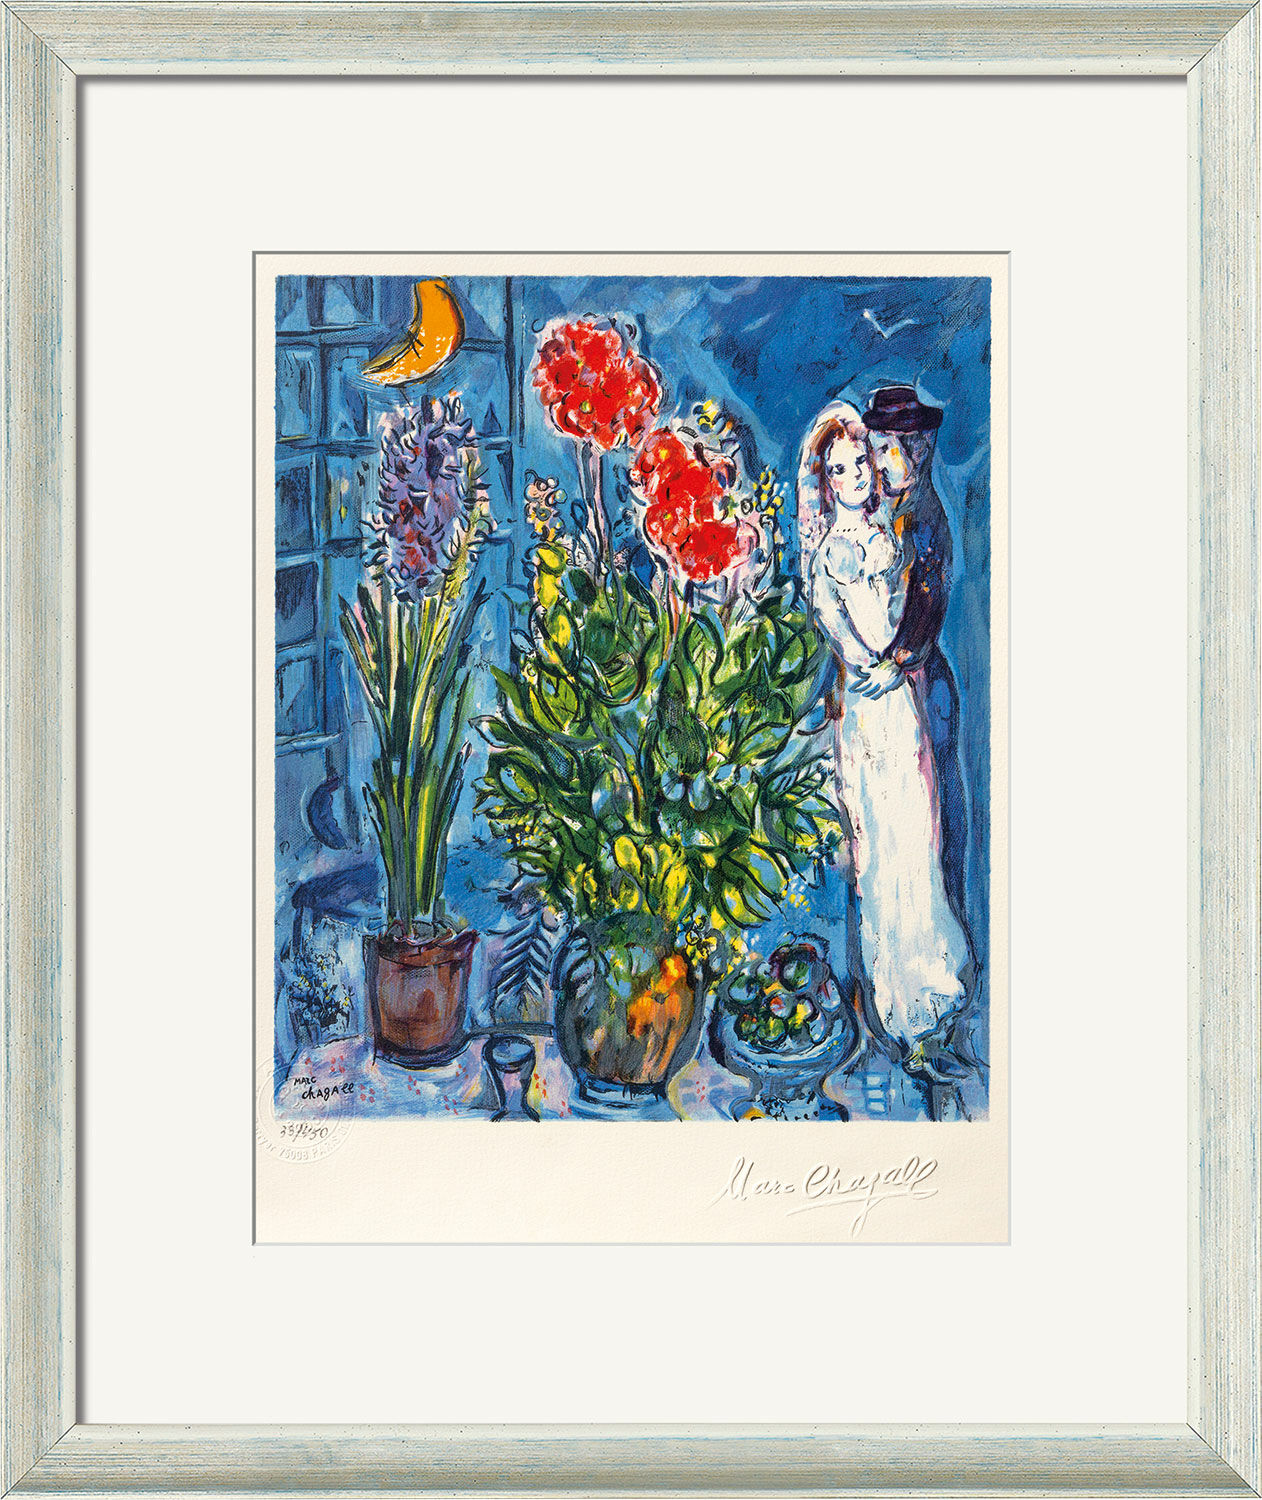 Billede "Les Mariés", indrammet von Marc Chagall